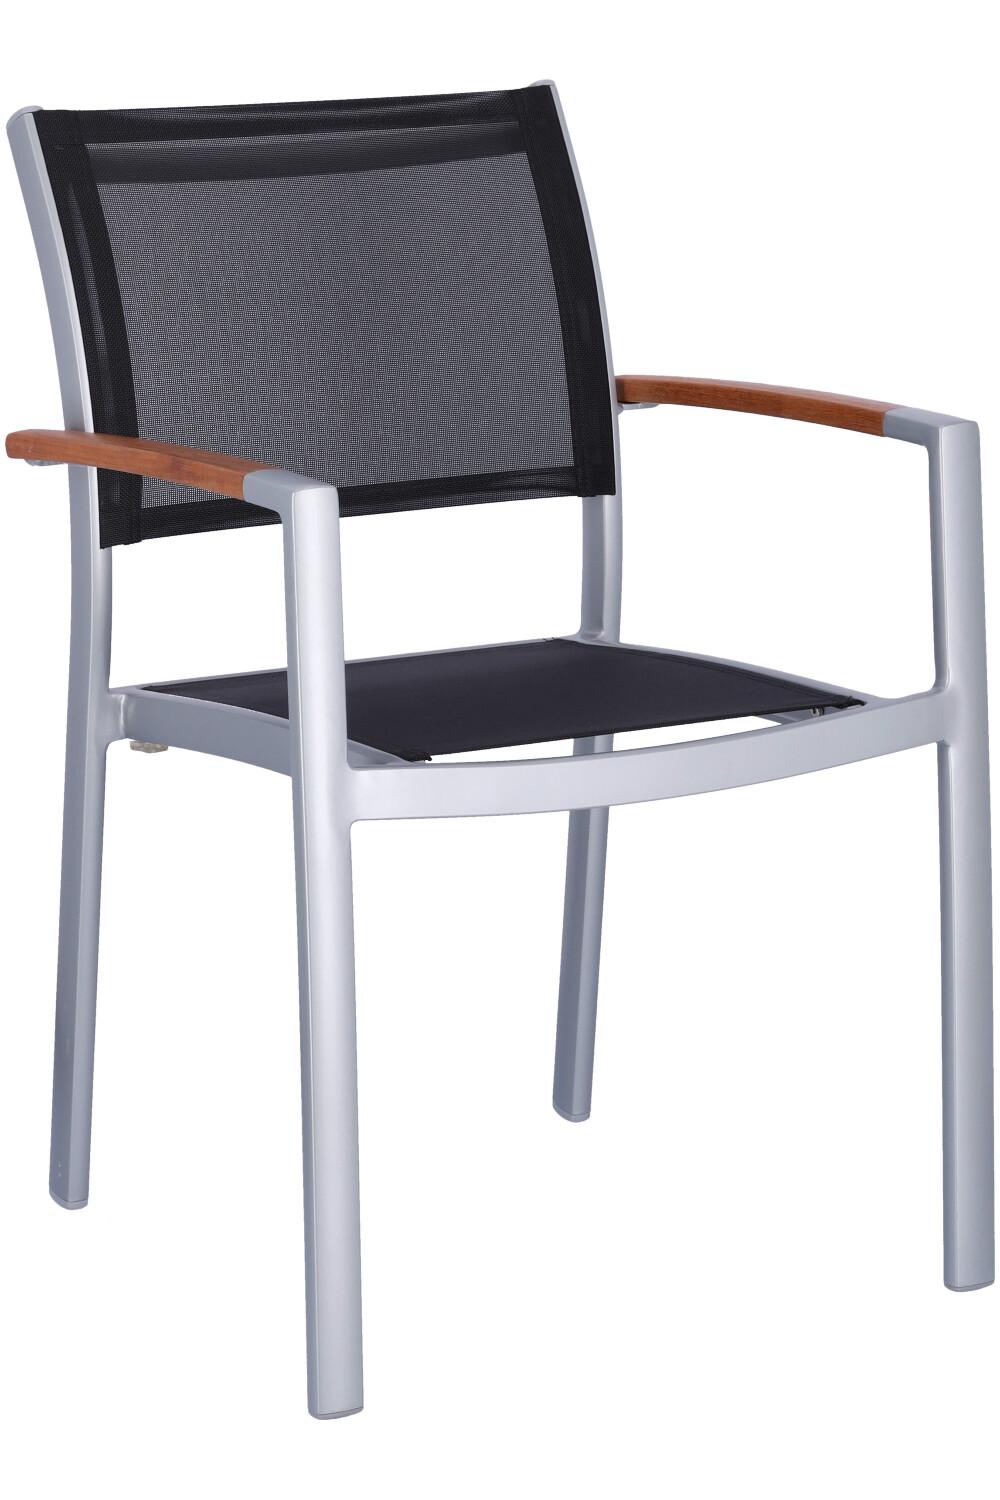 arm chair Tano